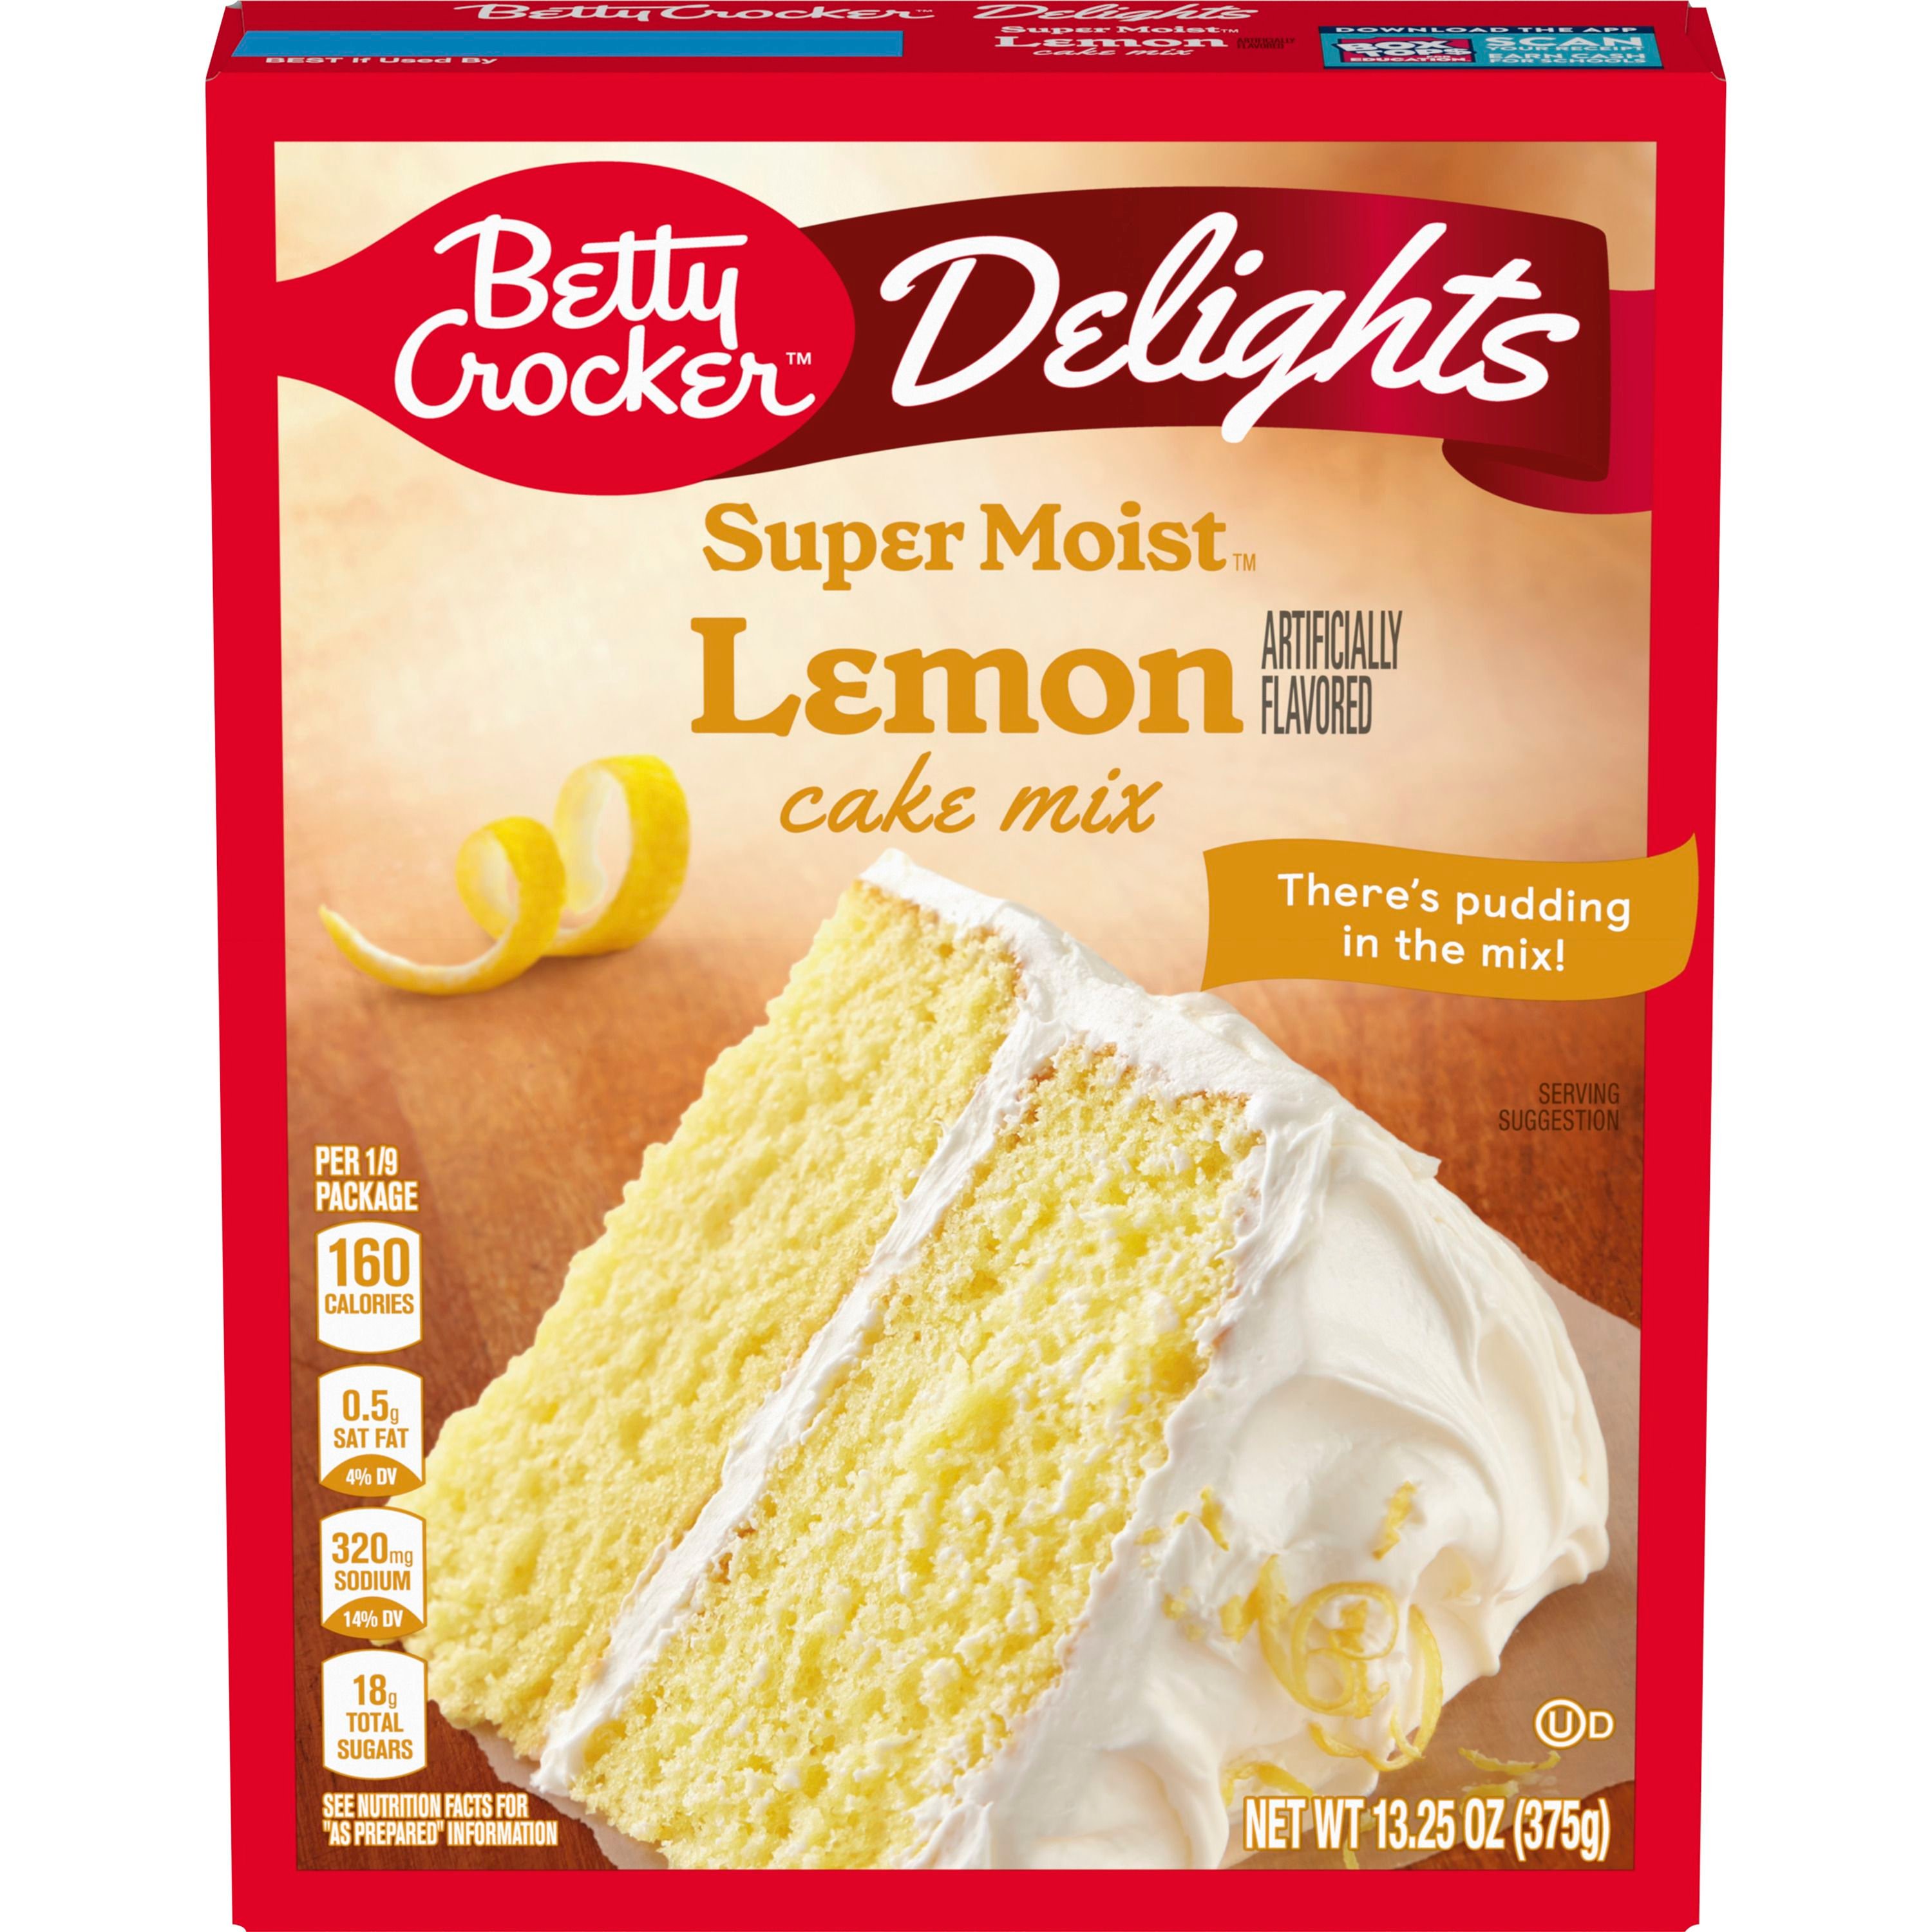 Betty Crocker Delights Super Moist Lemon Cake Mix, 13.25 oz. - Front